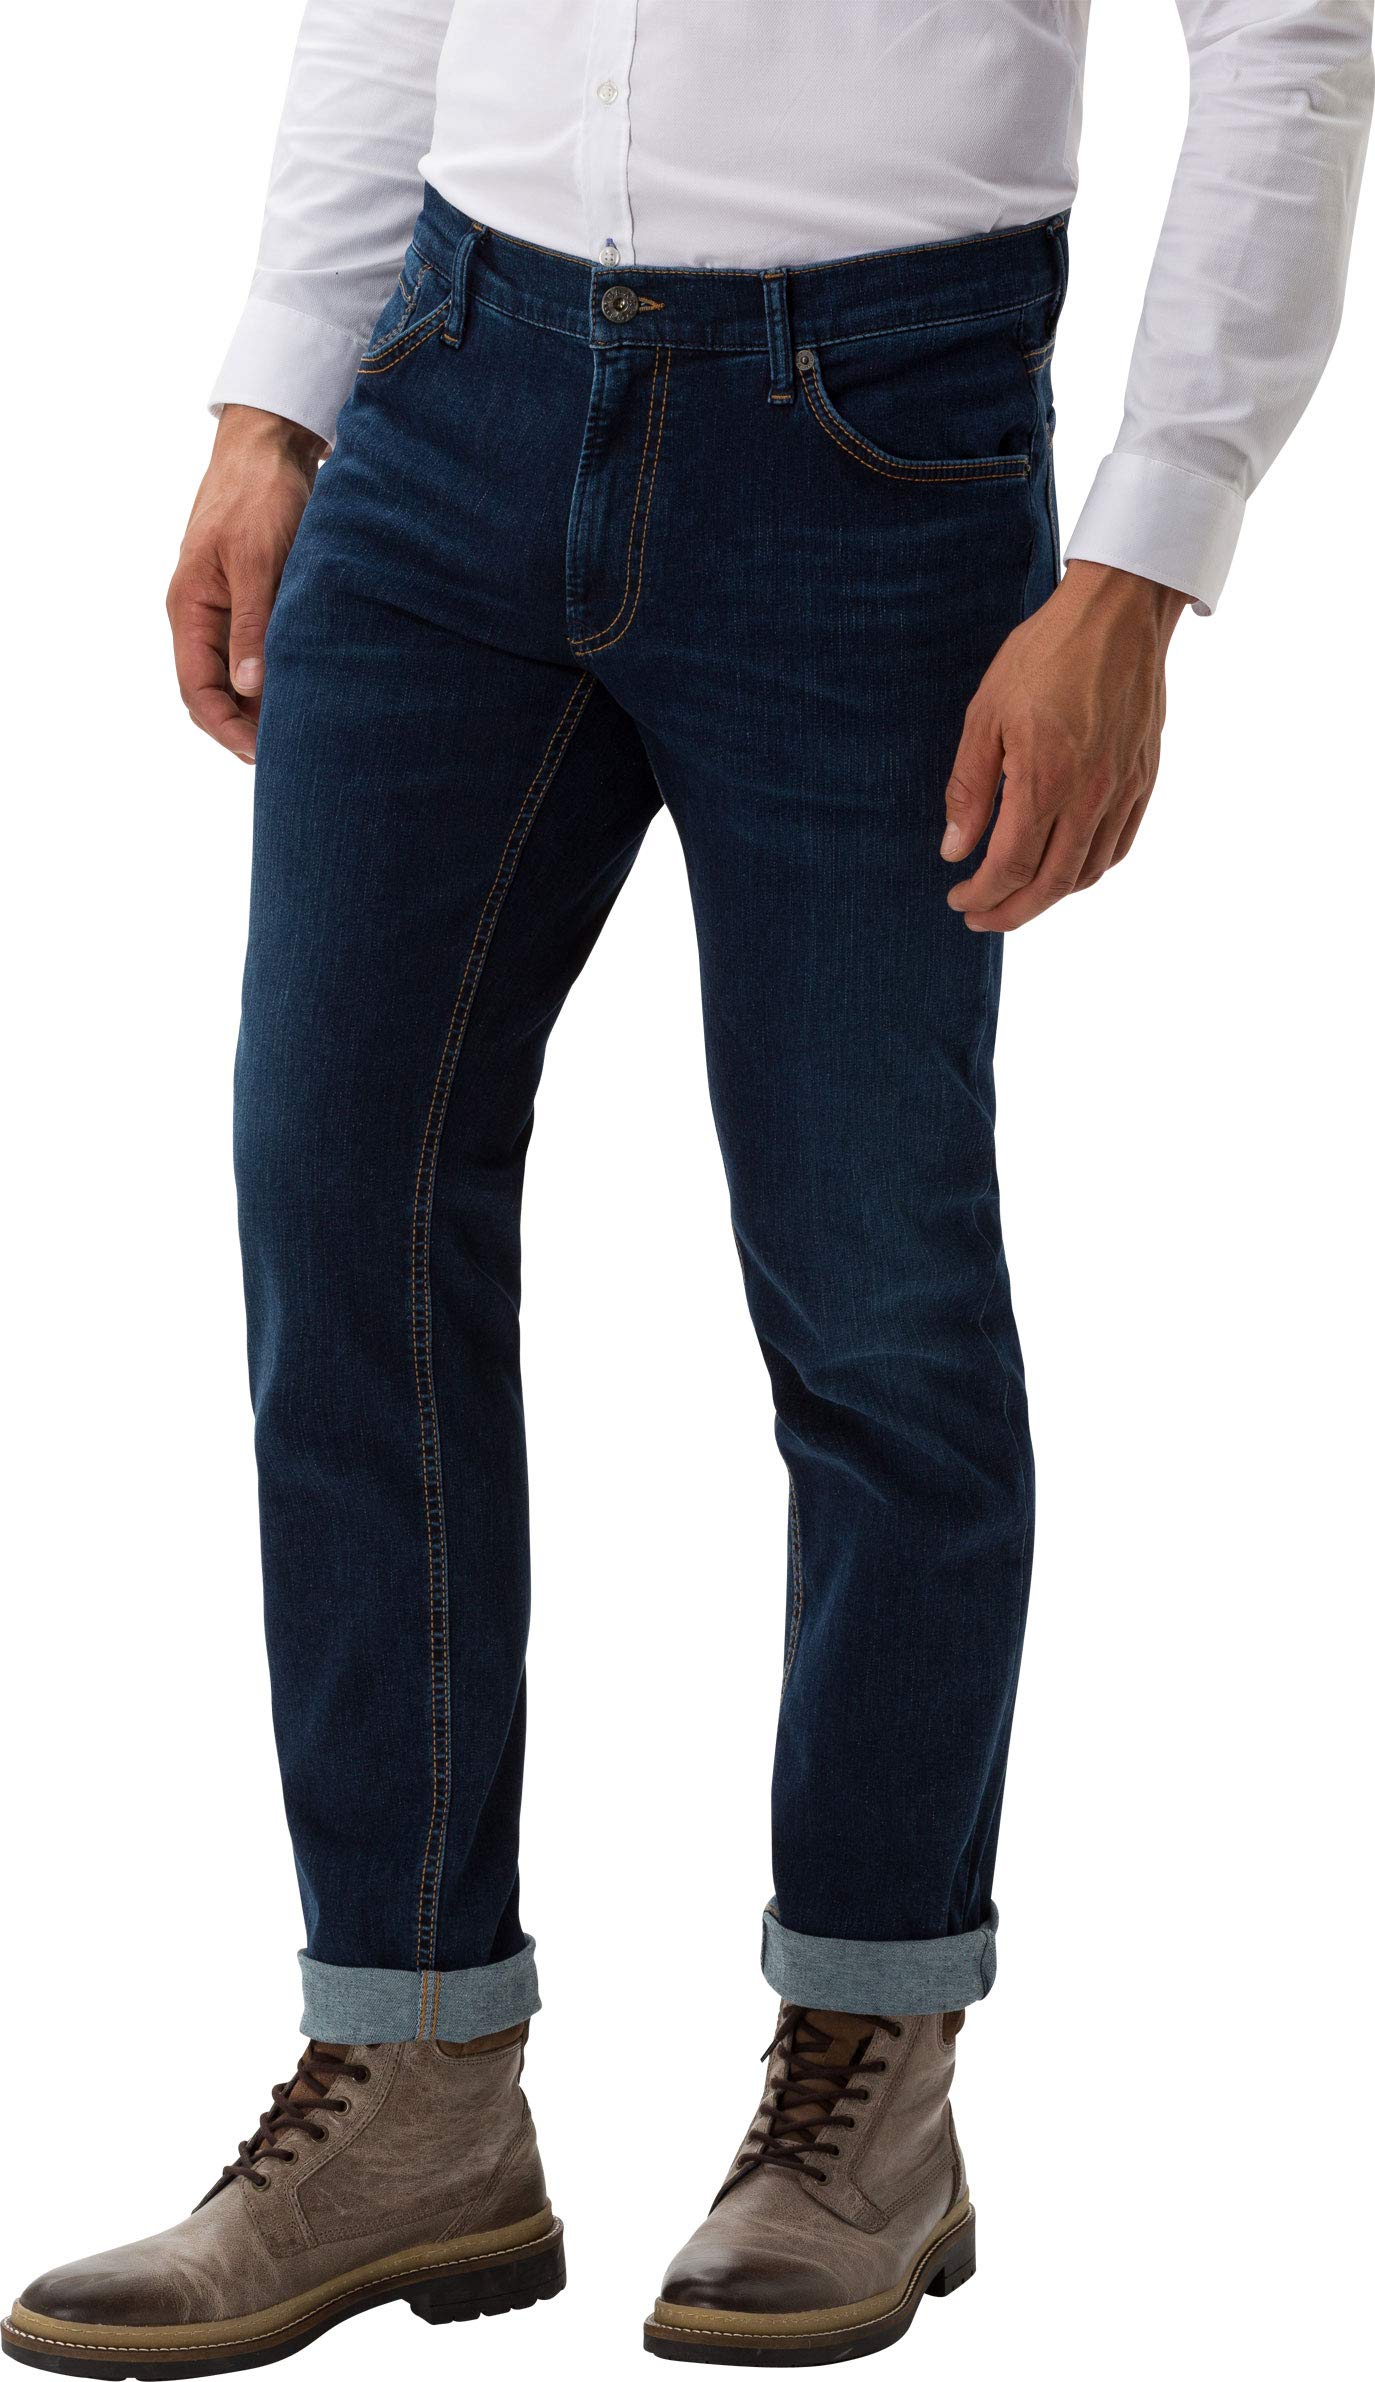 BRAX Herren Slim Fit Jeans Hose Style Chuck Hi-Flex Stretch Baumwolle, STONE BLUE USED, 38W / 38L